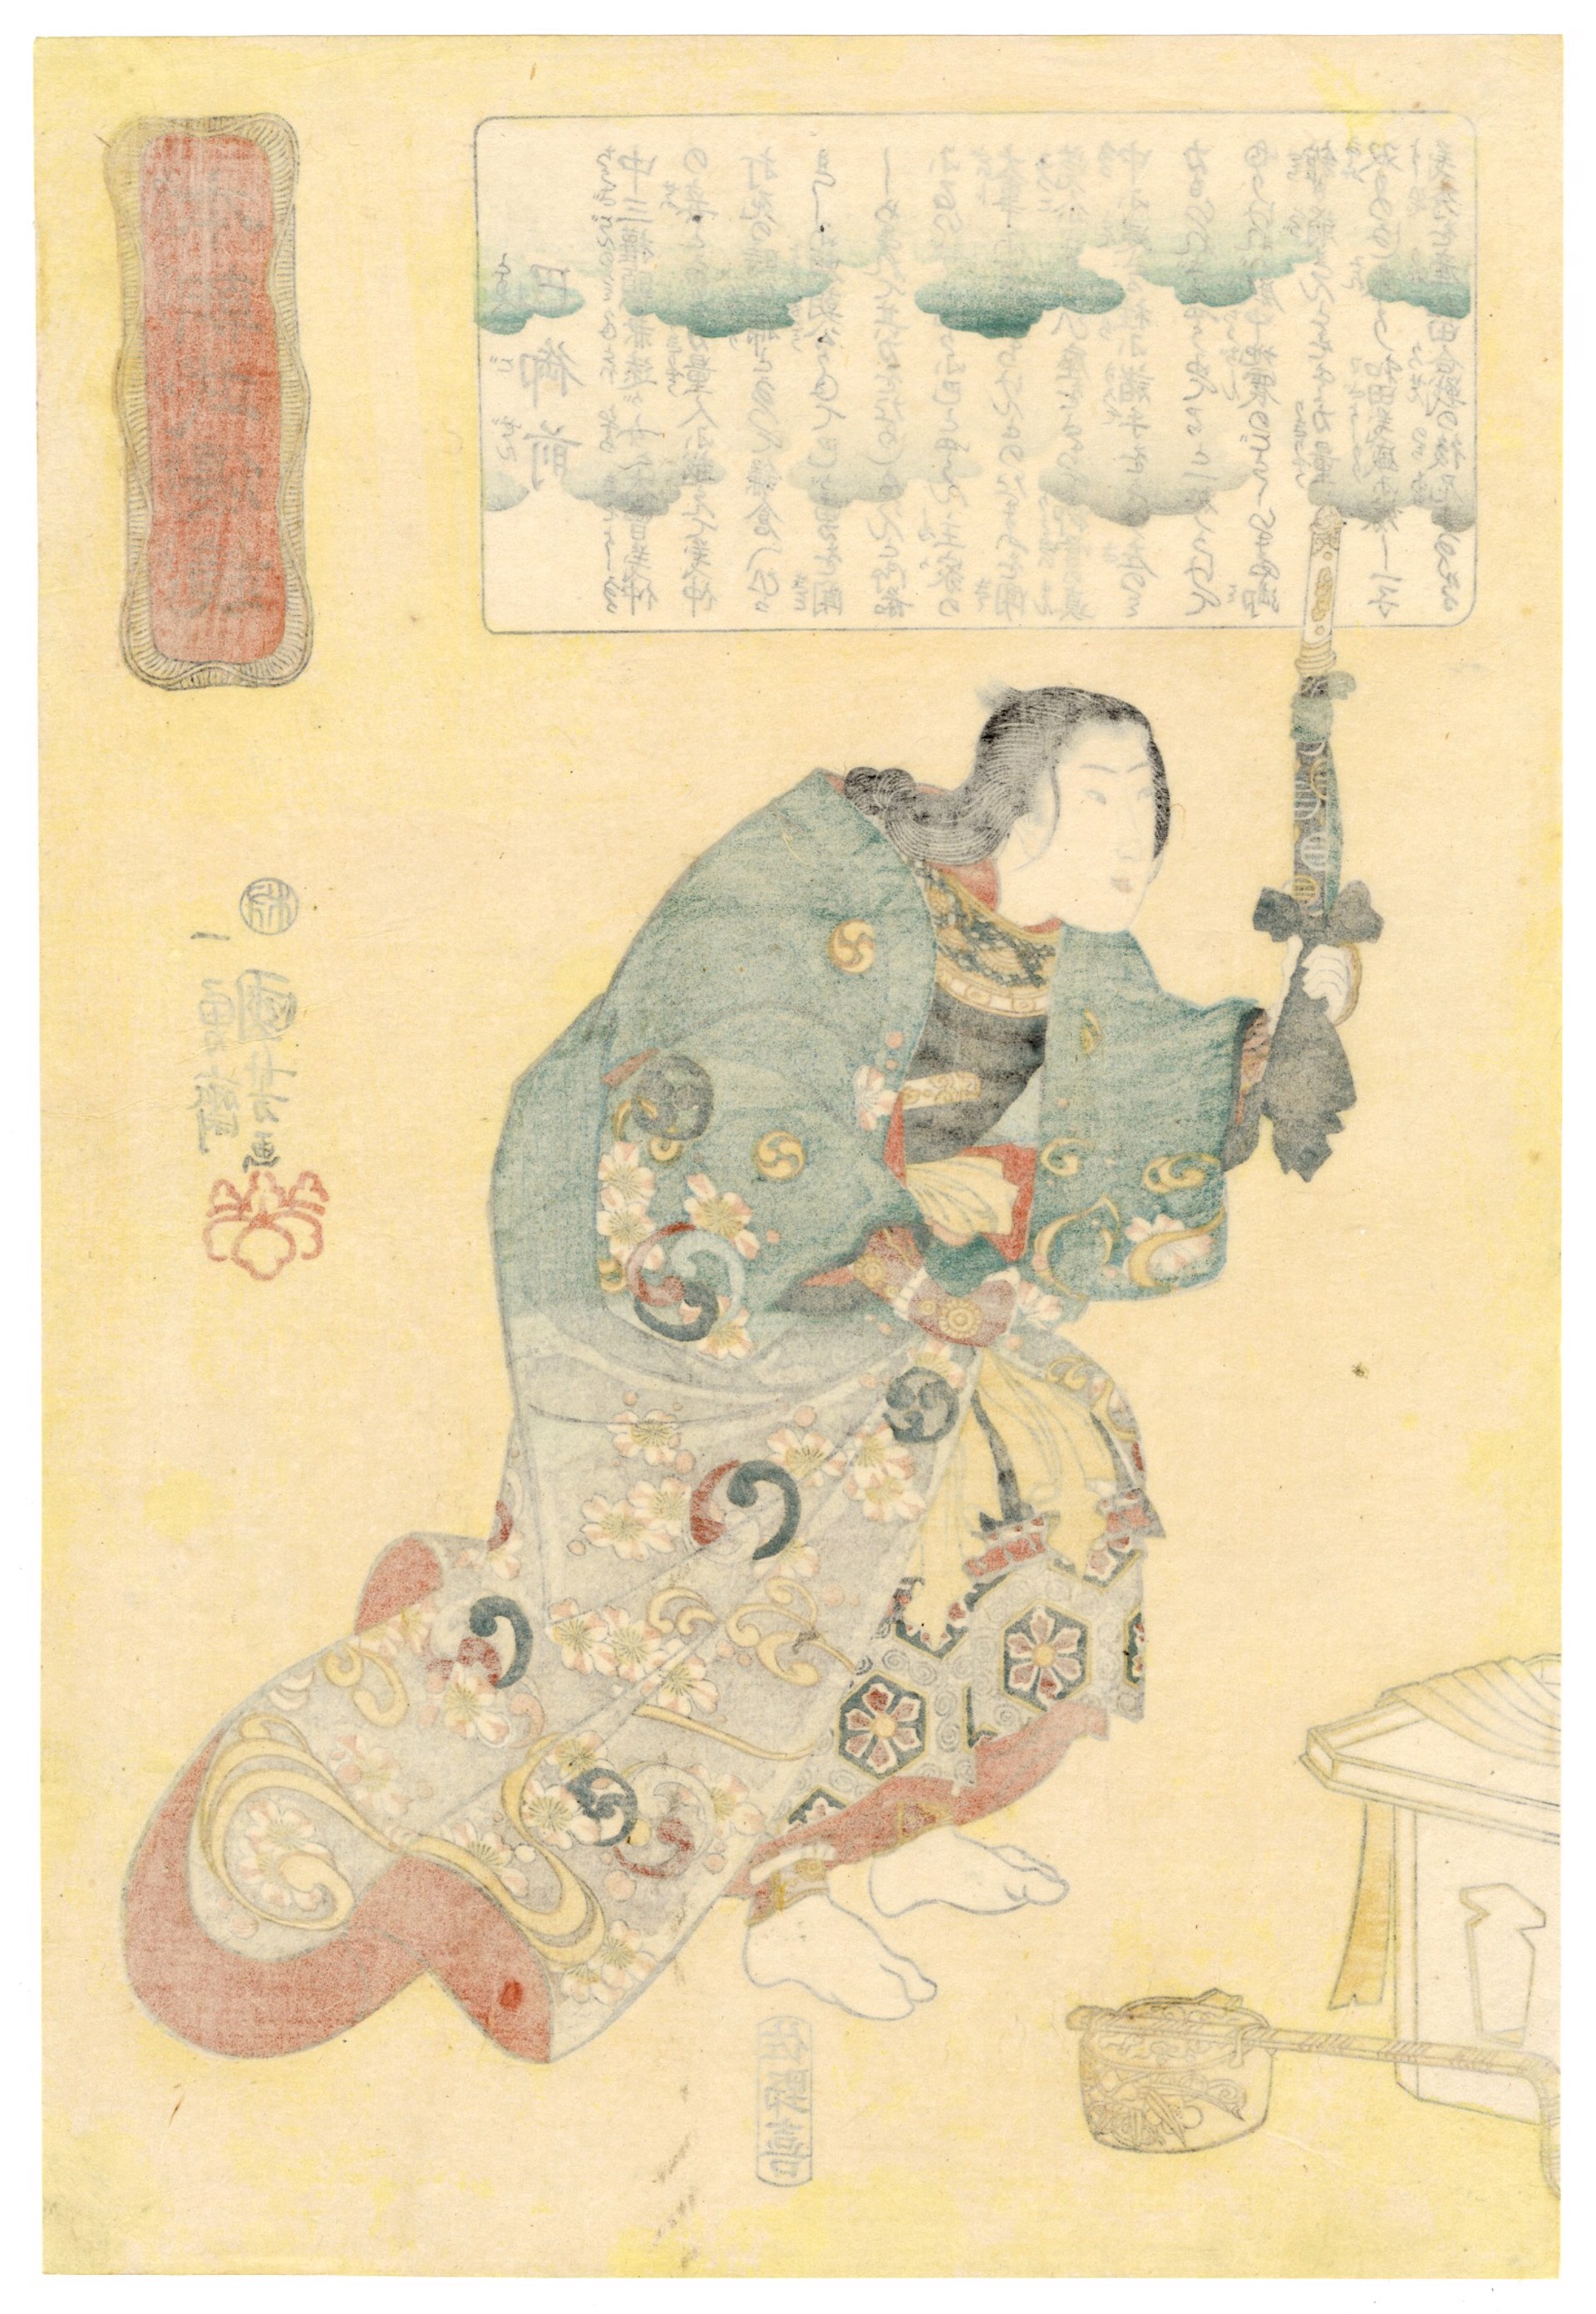 Tomoe-Gozen Wearing a Kimono over Armor while Holding a Wakizashi by Kuniyoshi